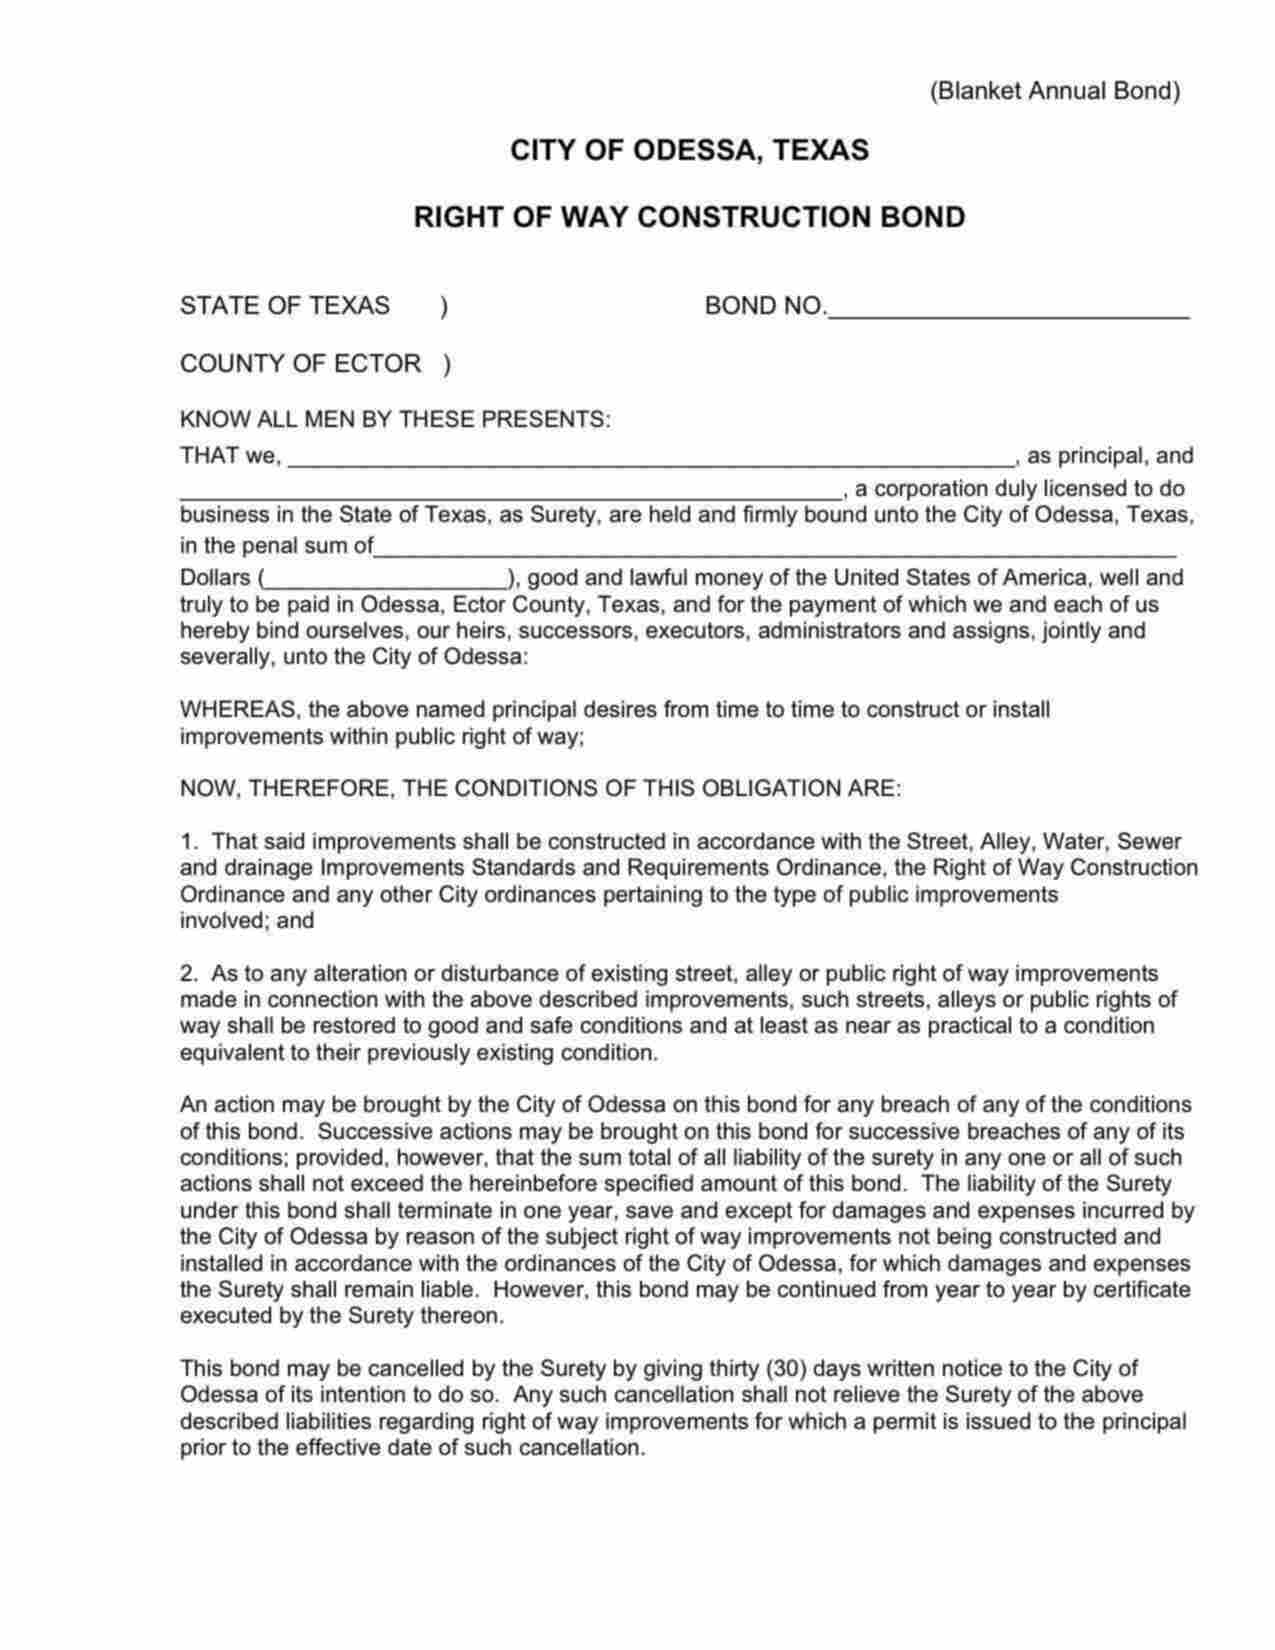 Texas Right of Way Construction Bond Form